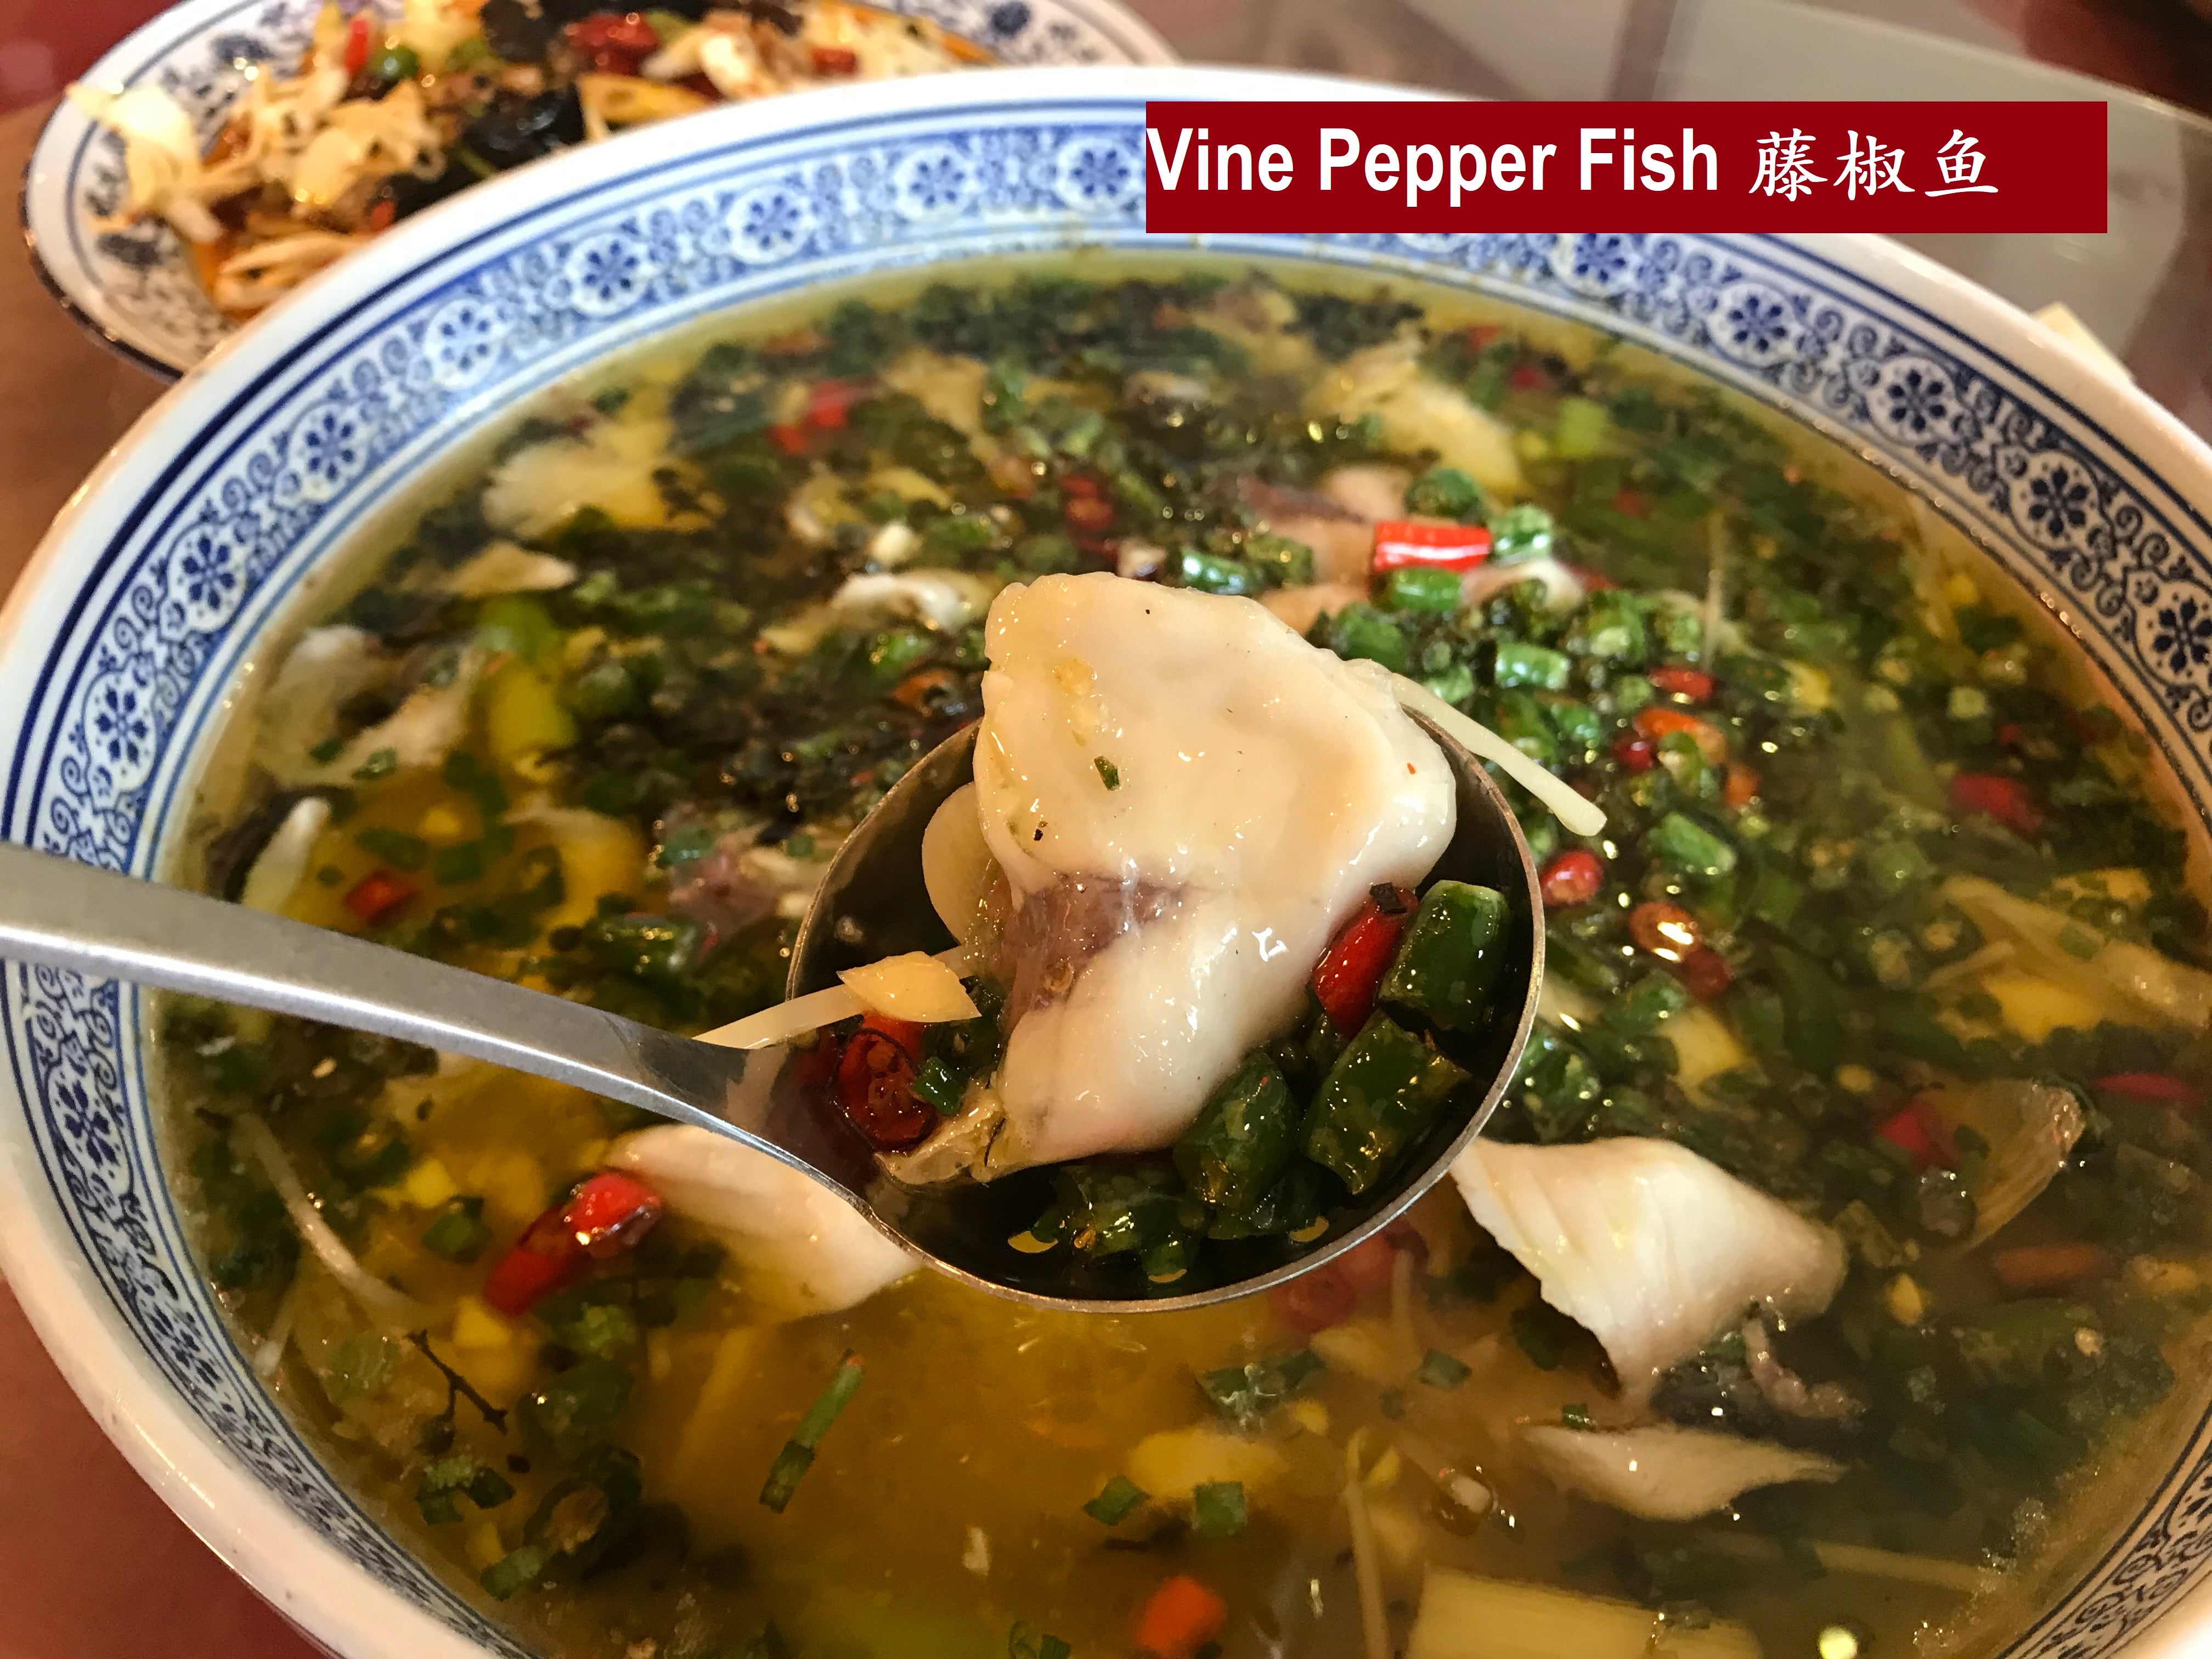 Vine Pepper Fish Slices 藤椒鱼